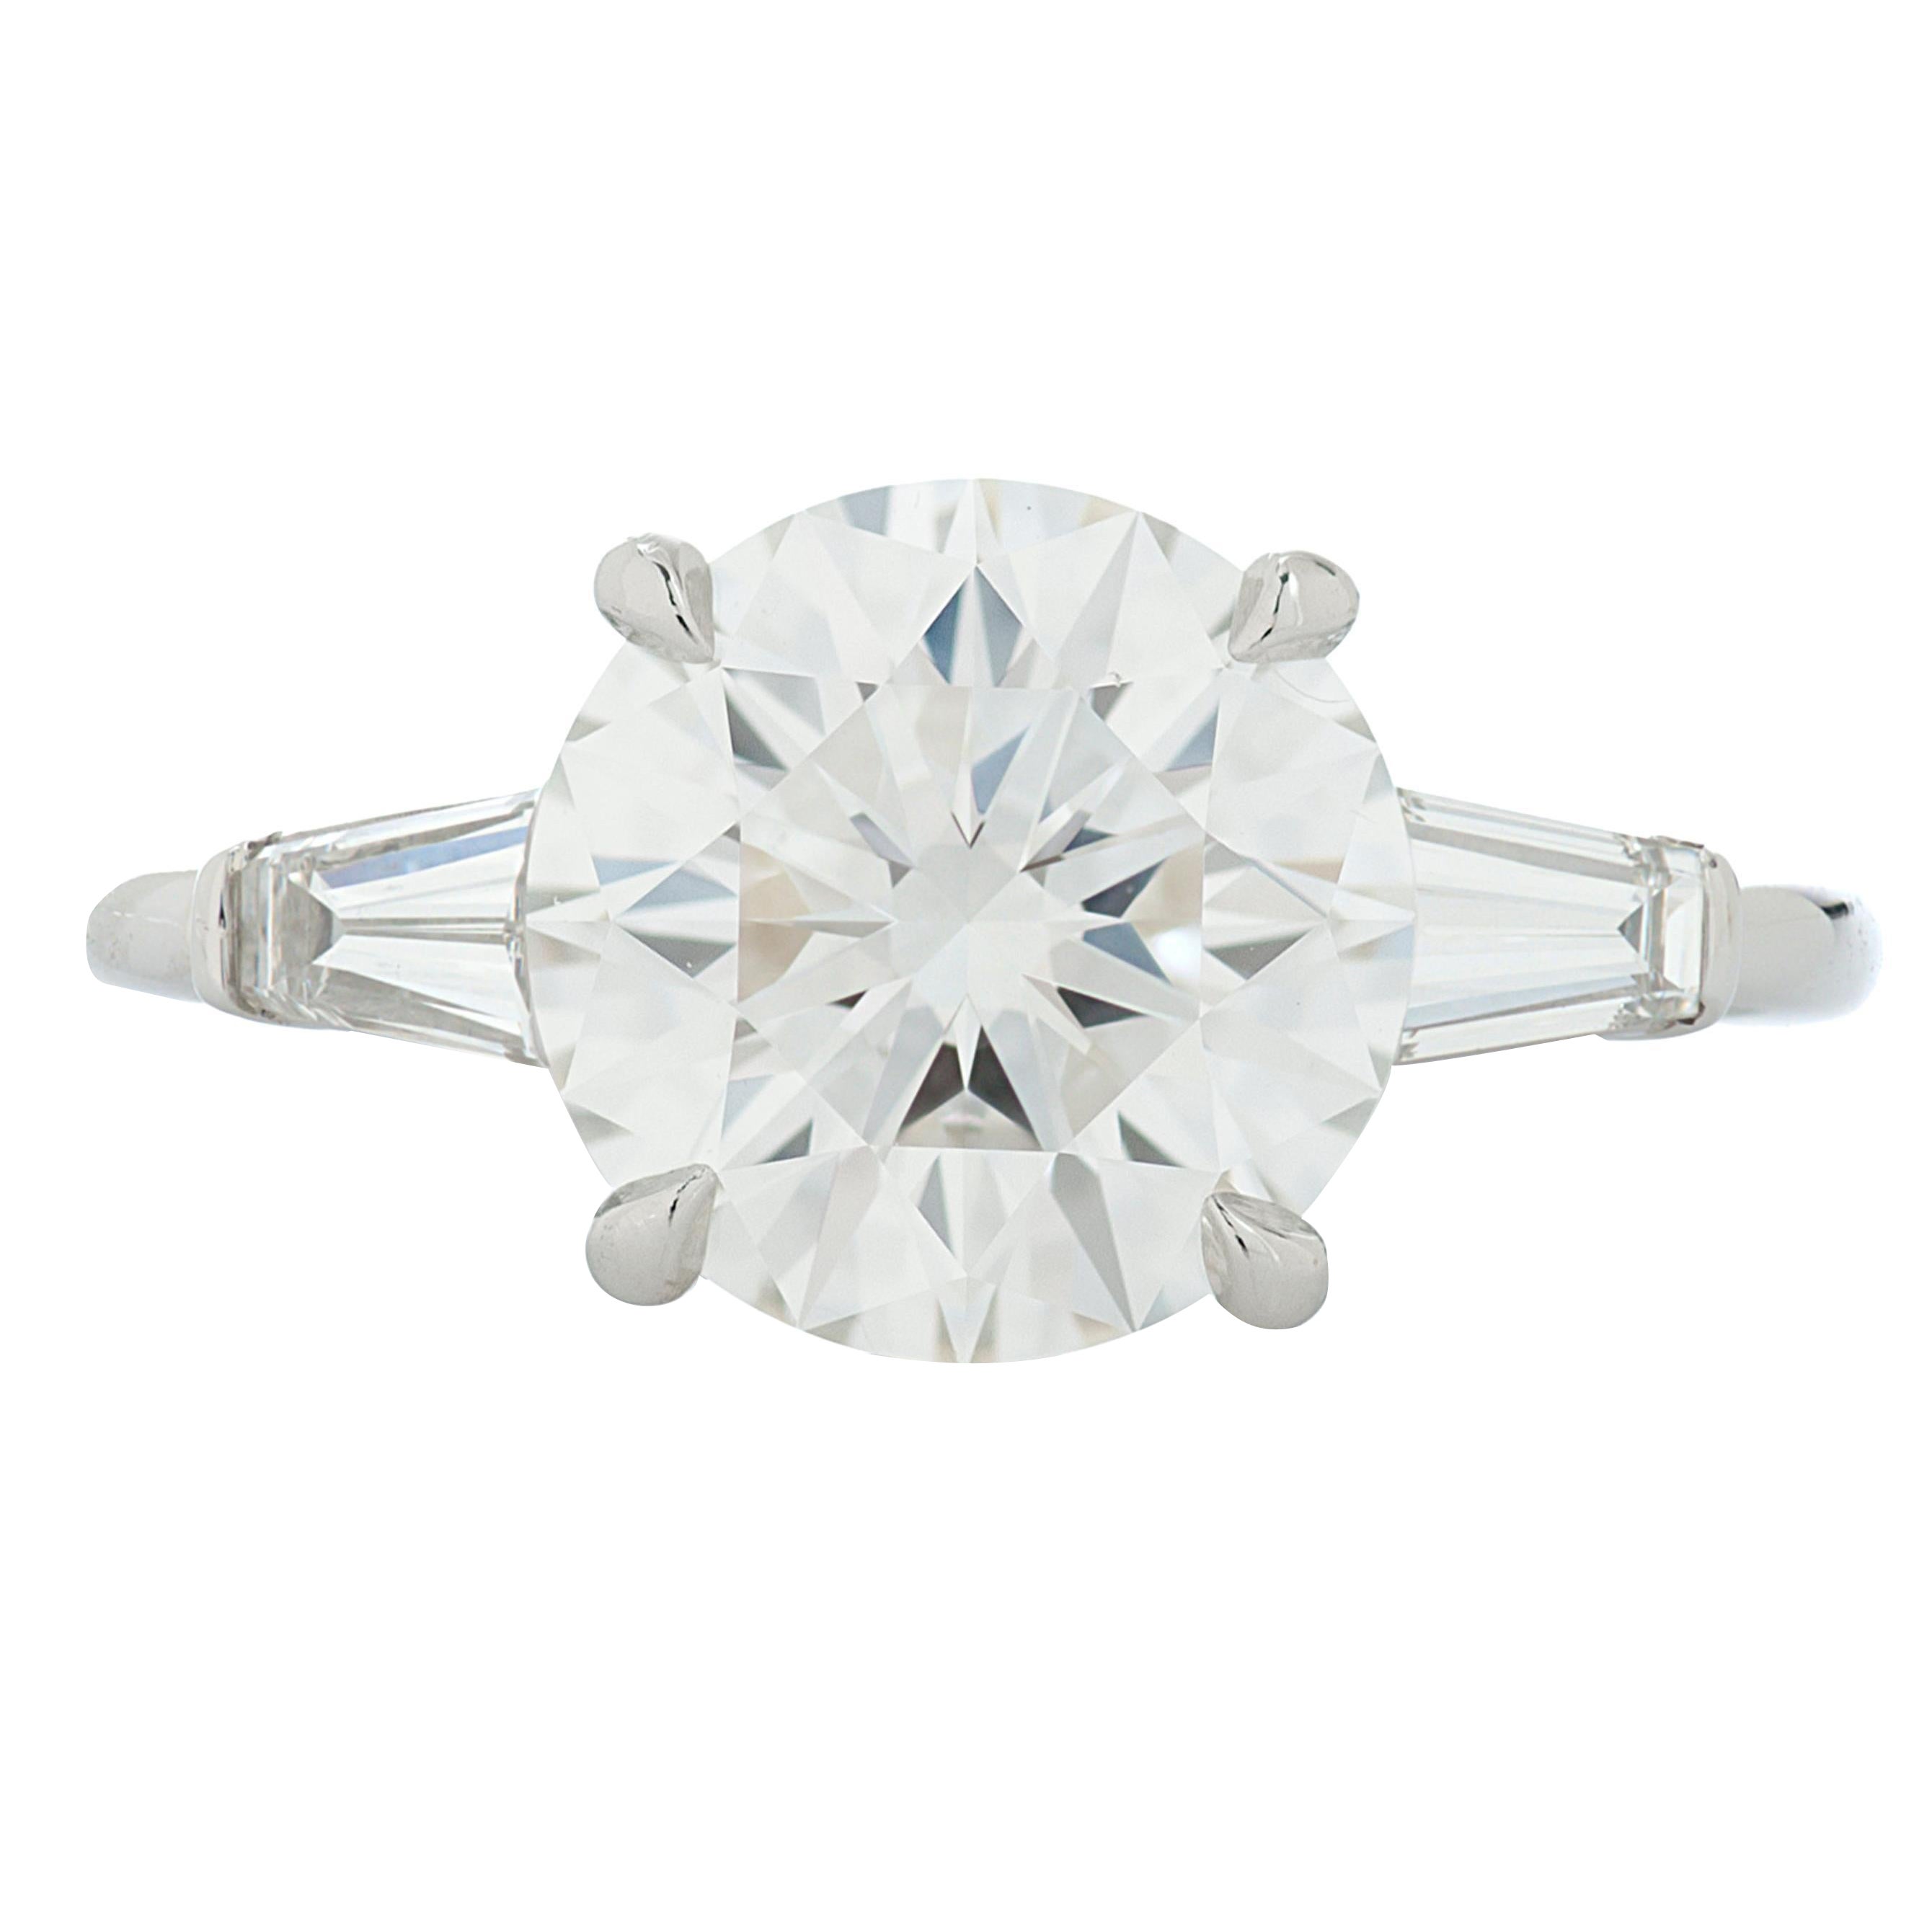 Tiffany & Co. GIA Certified 3.41 Carat G/VVS2 Round Diamond Engagement Ring